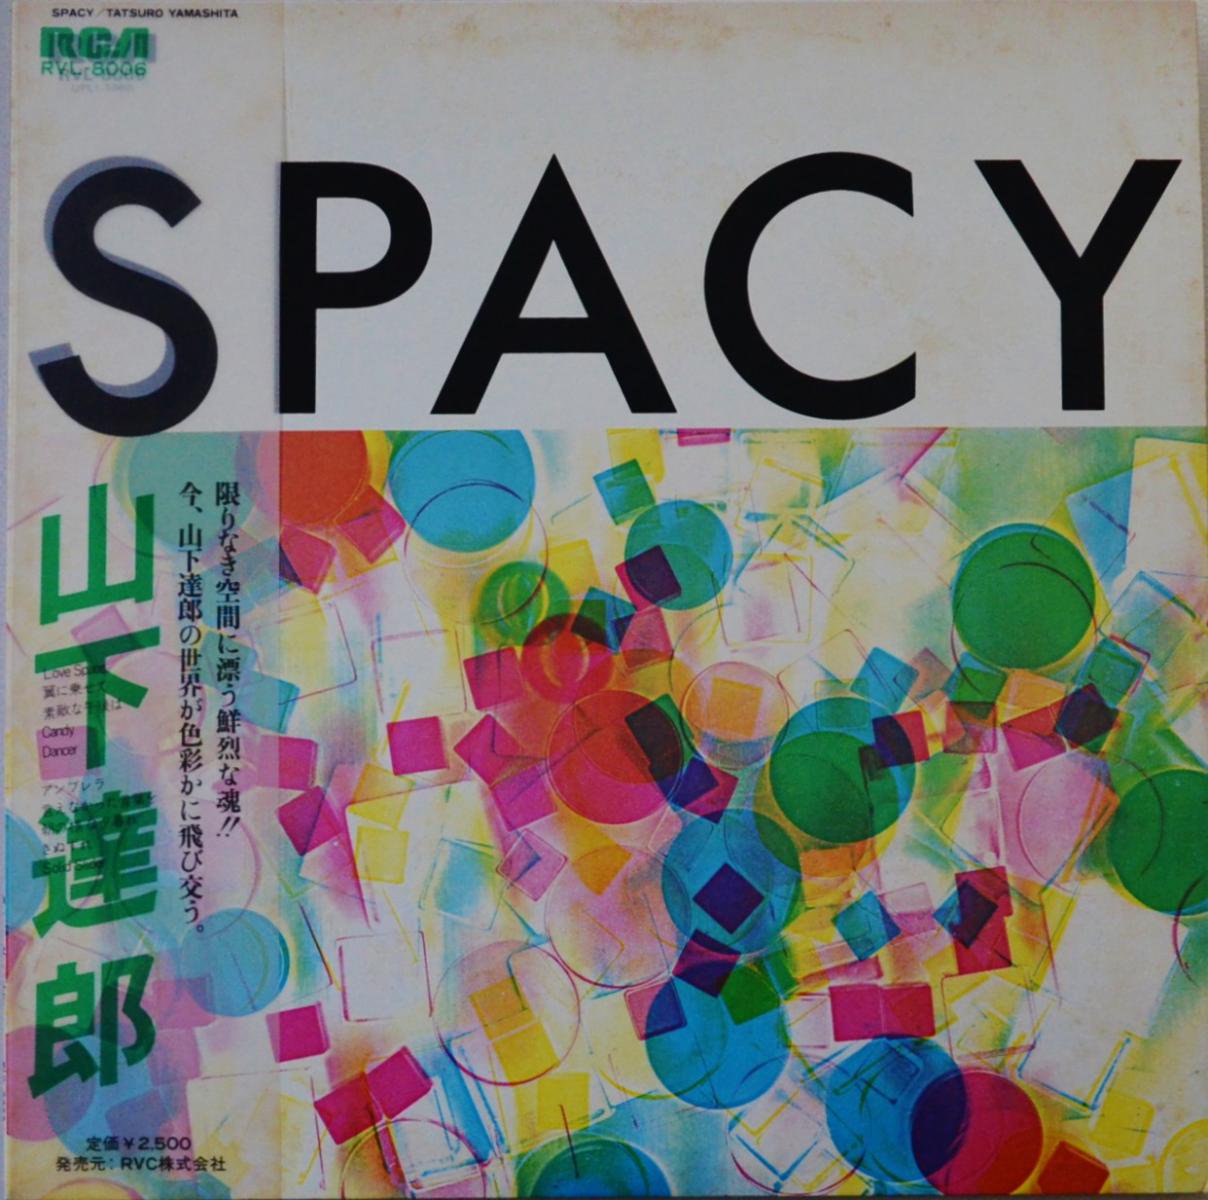 ãϺ TATSURO YAMASHITA / SPACY (LP)